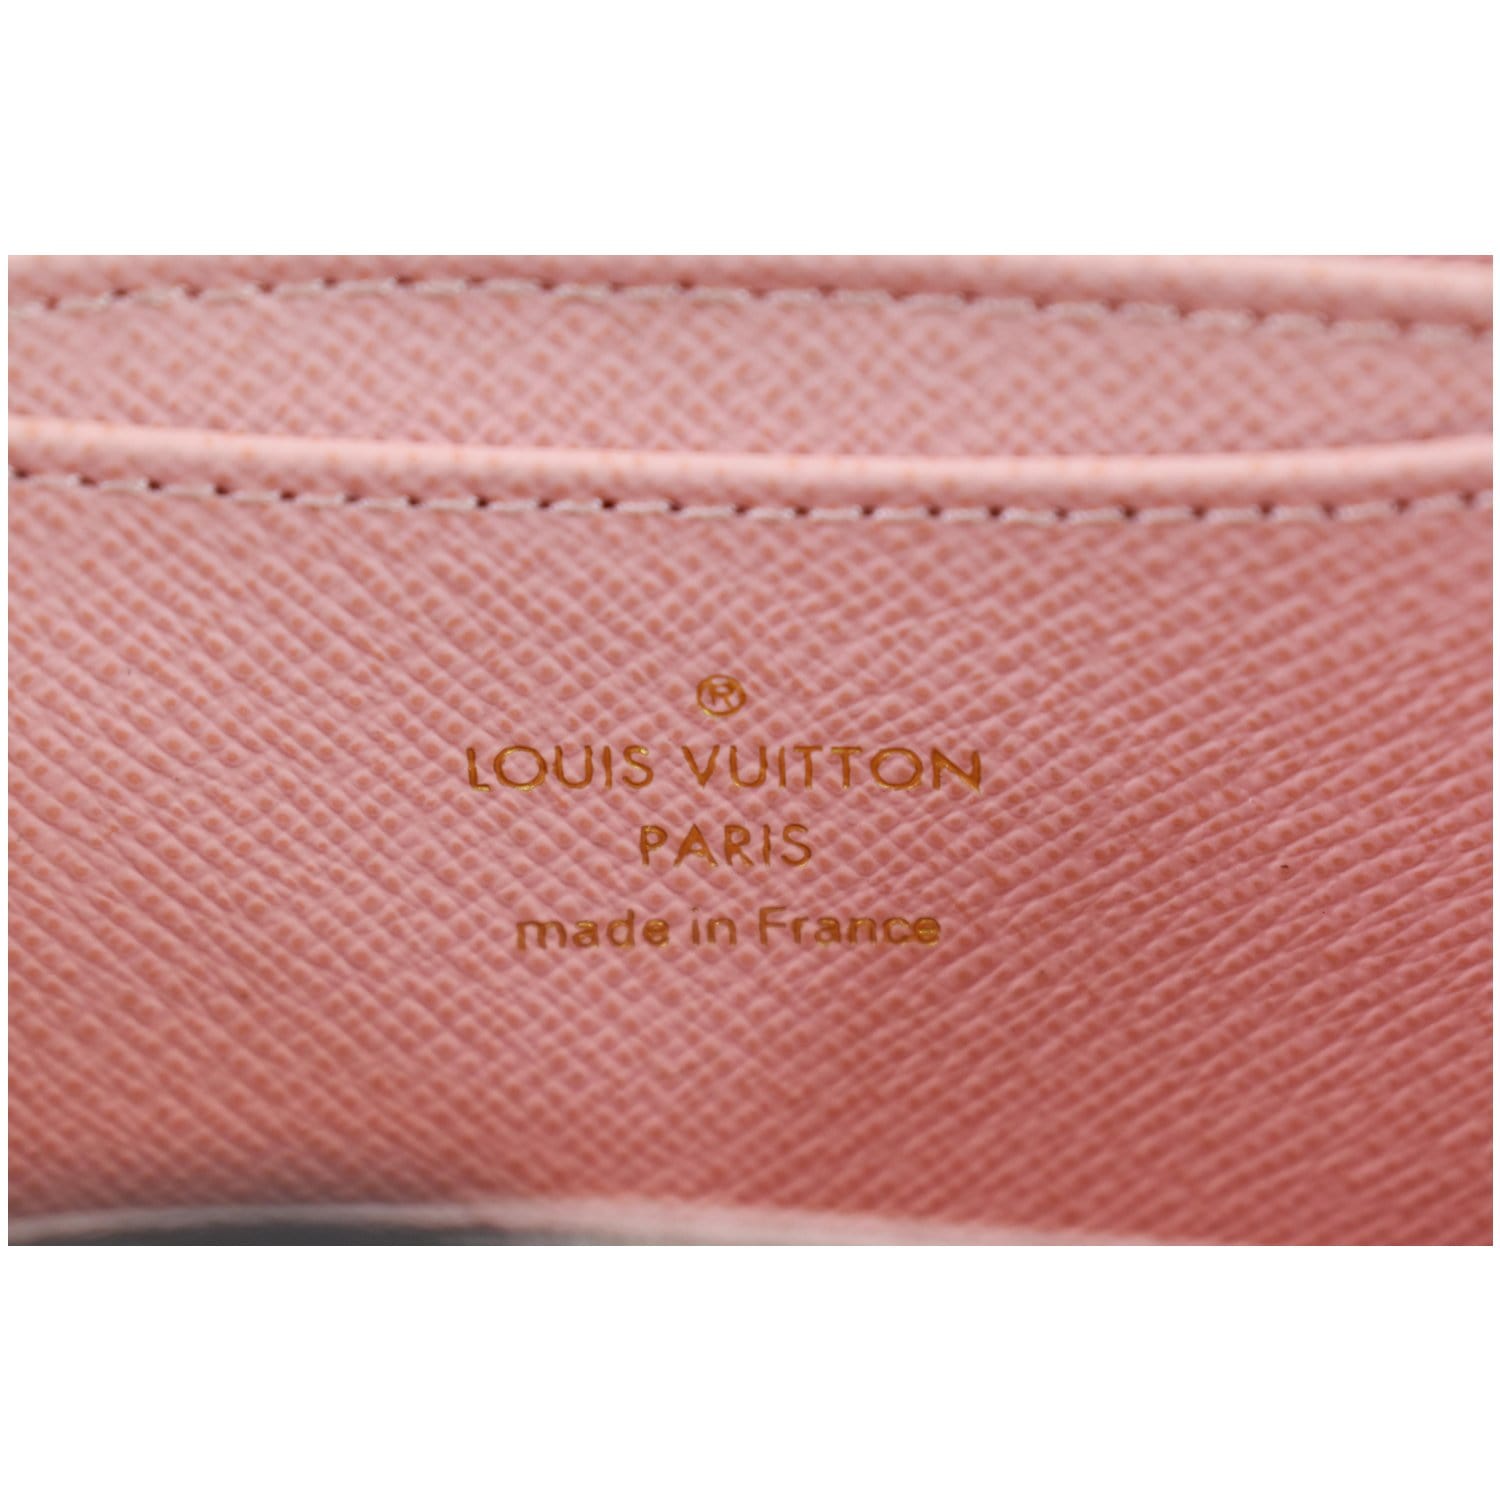 Louis Vuitton Purse - PandaFinds